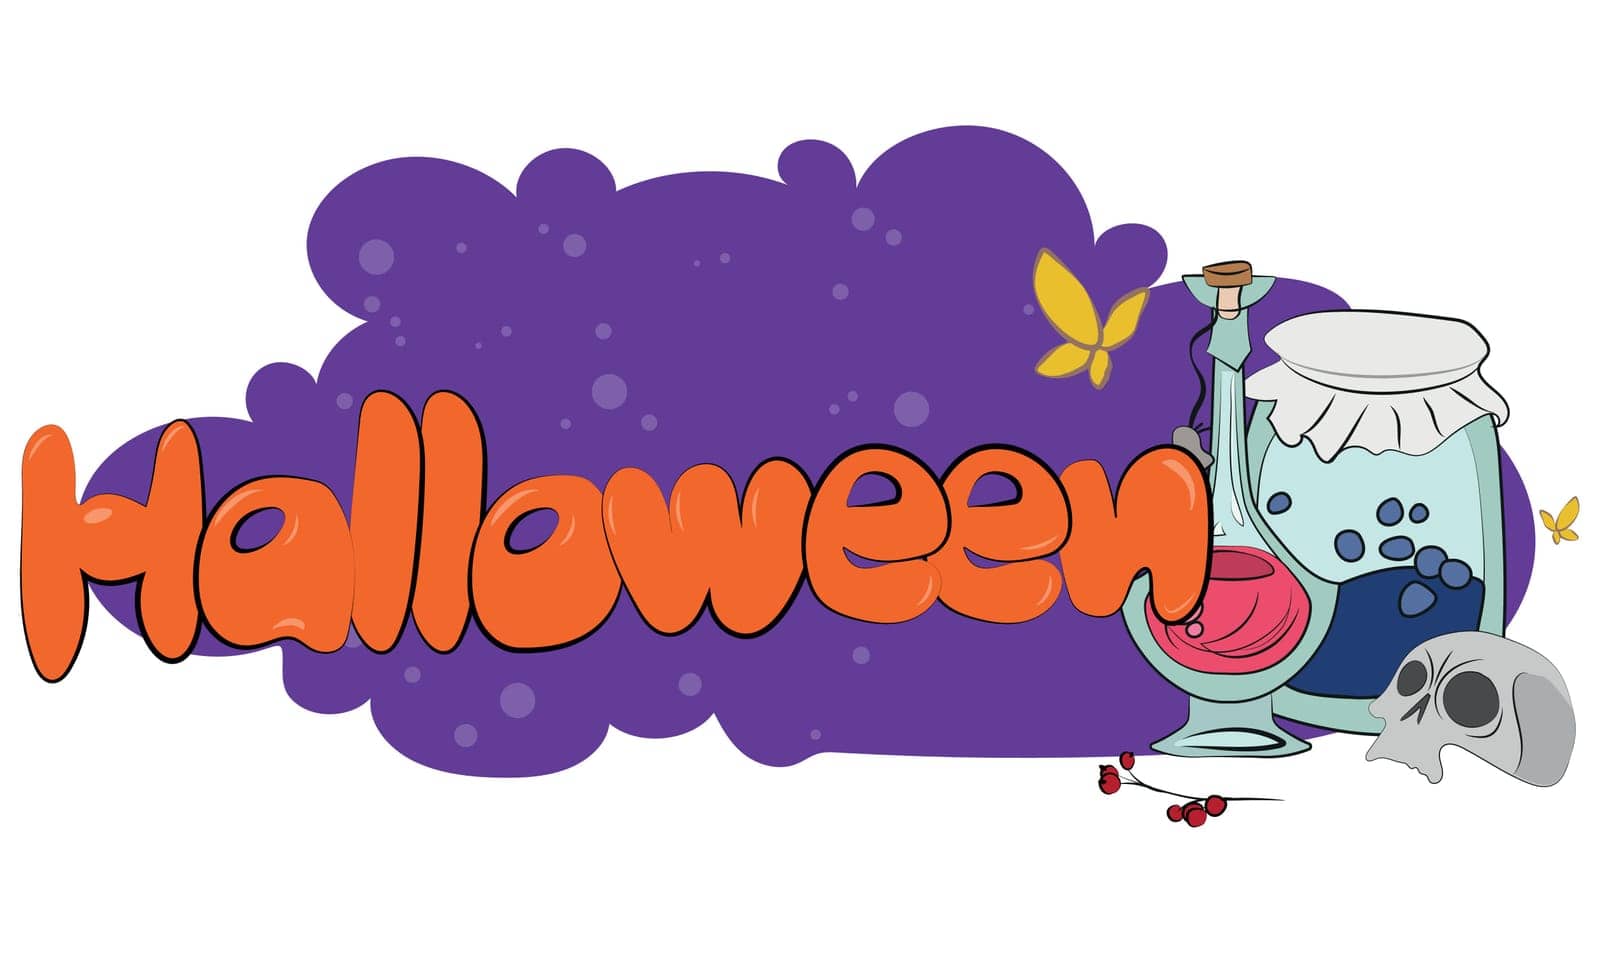 Happy Halloween banner or party invitation by milastokerpro